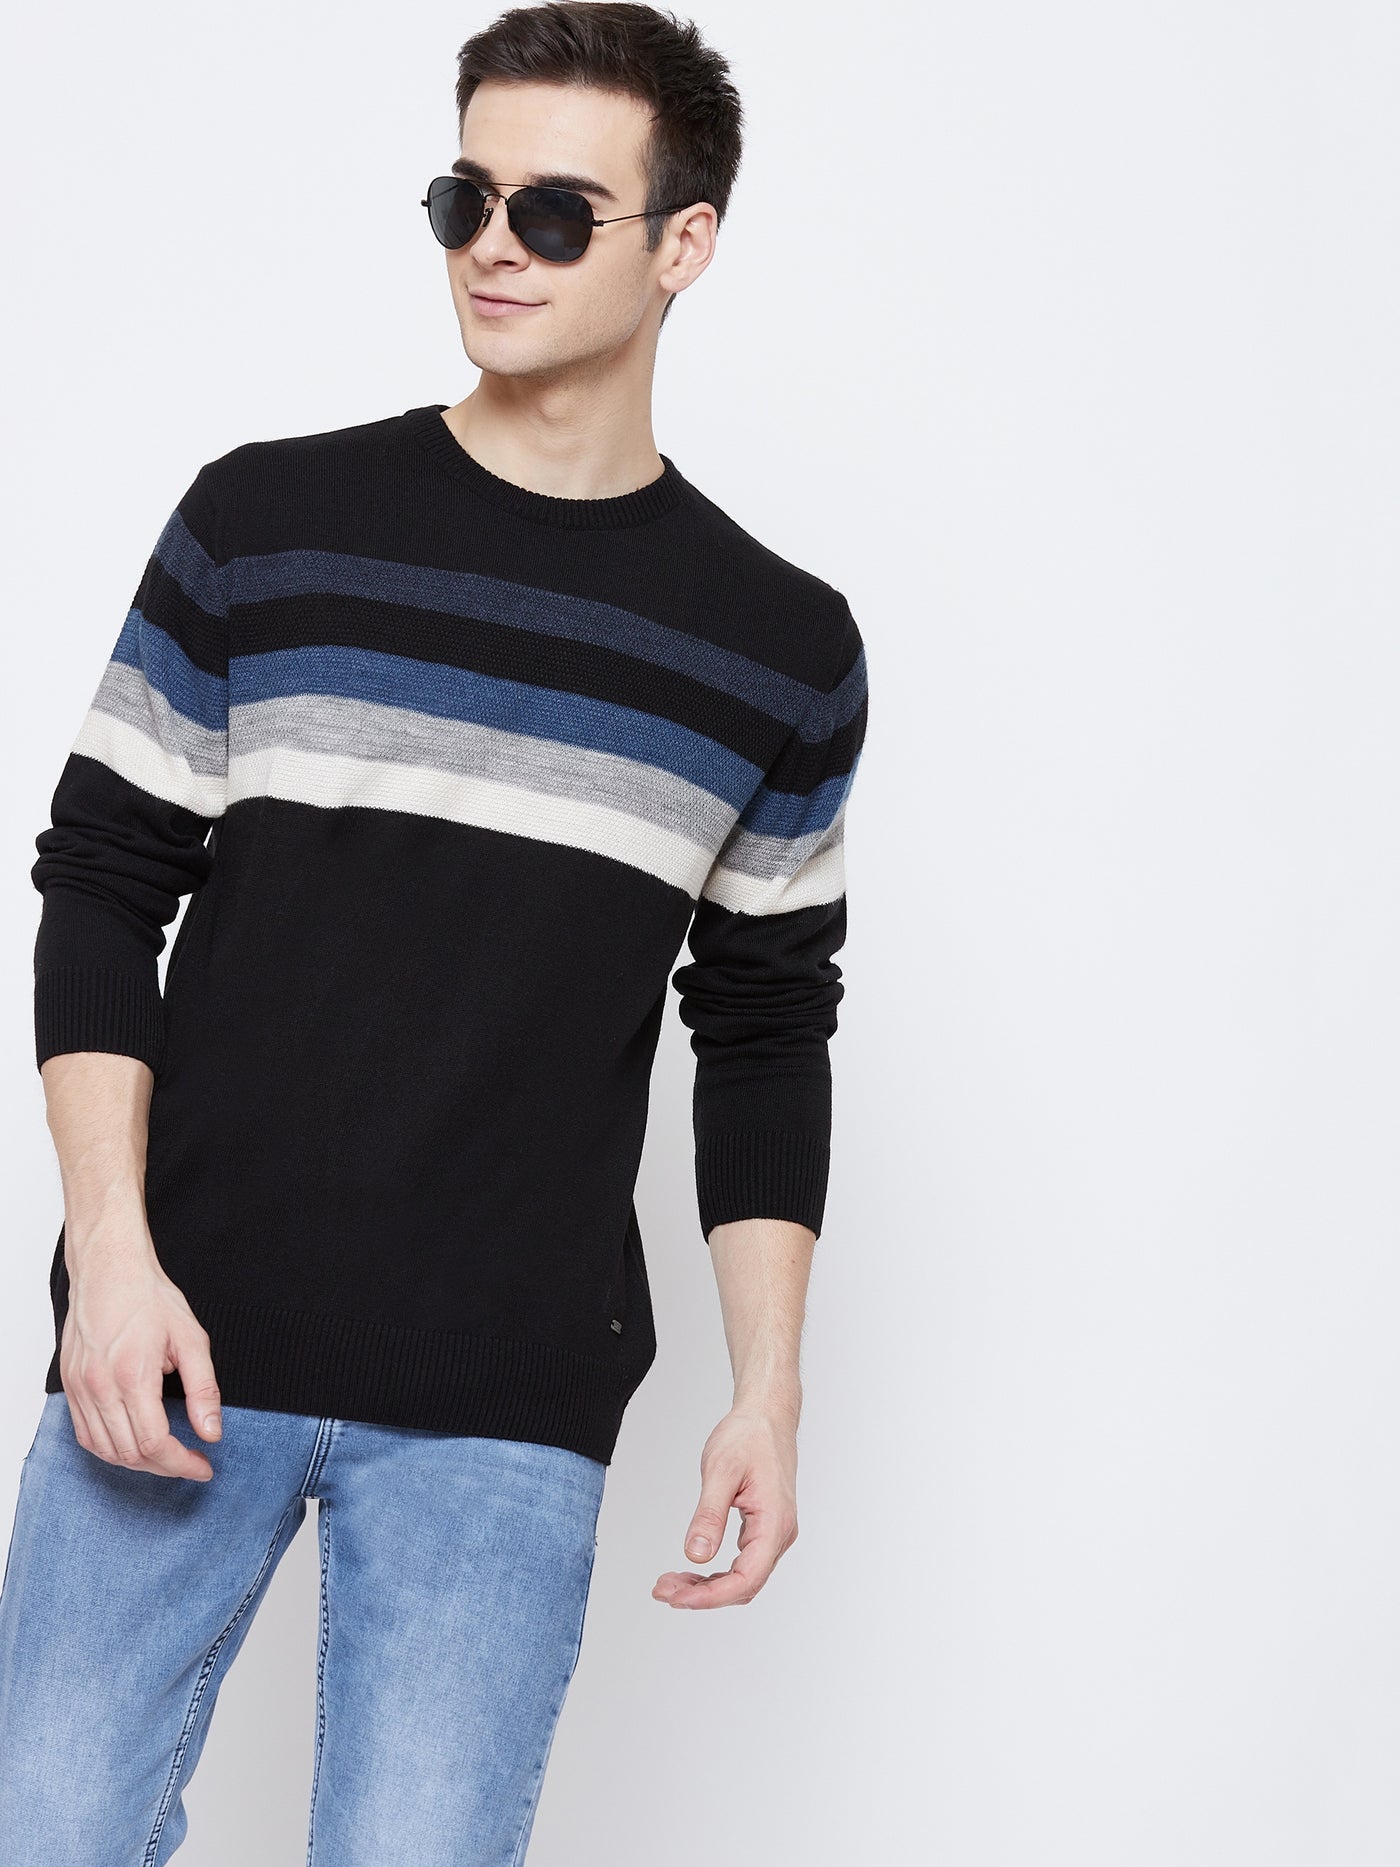 Black Colorblocked Round Neck Sweater - Men Sweaters